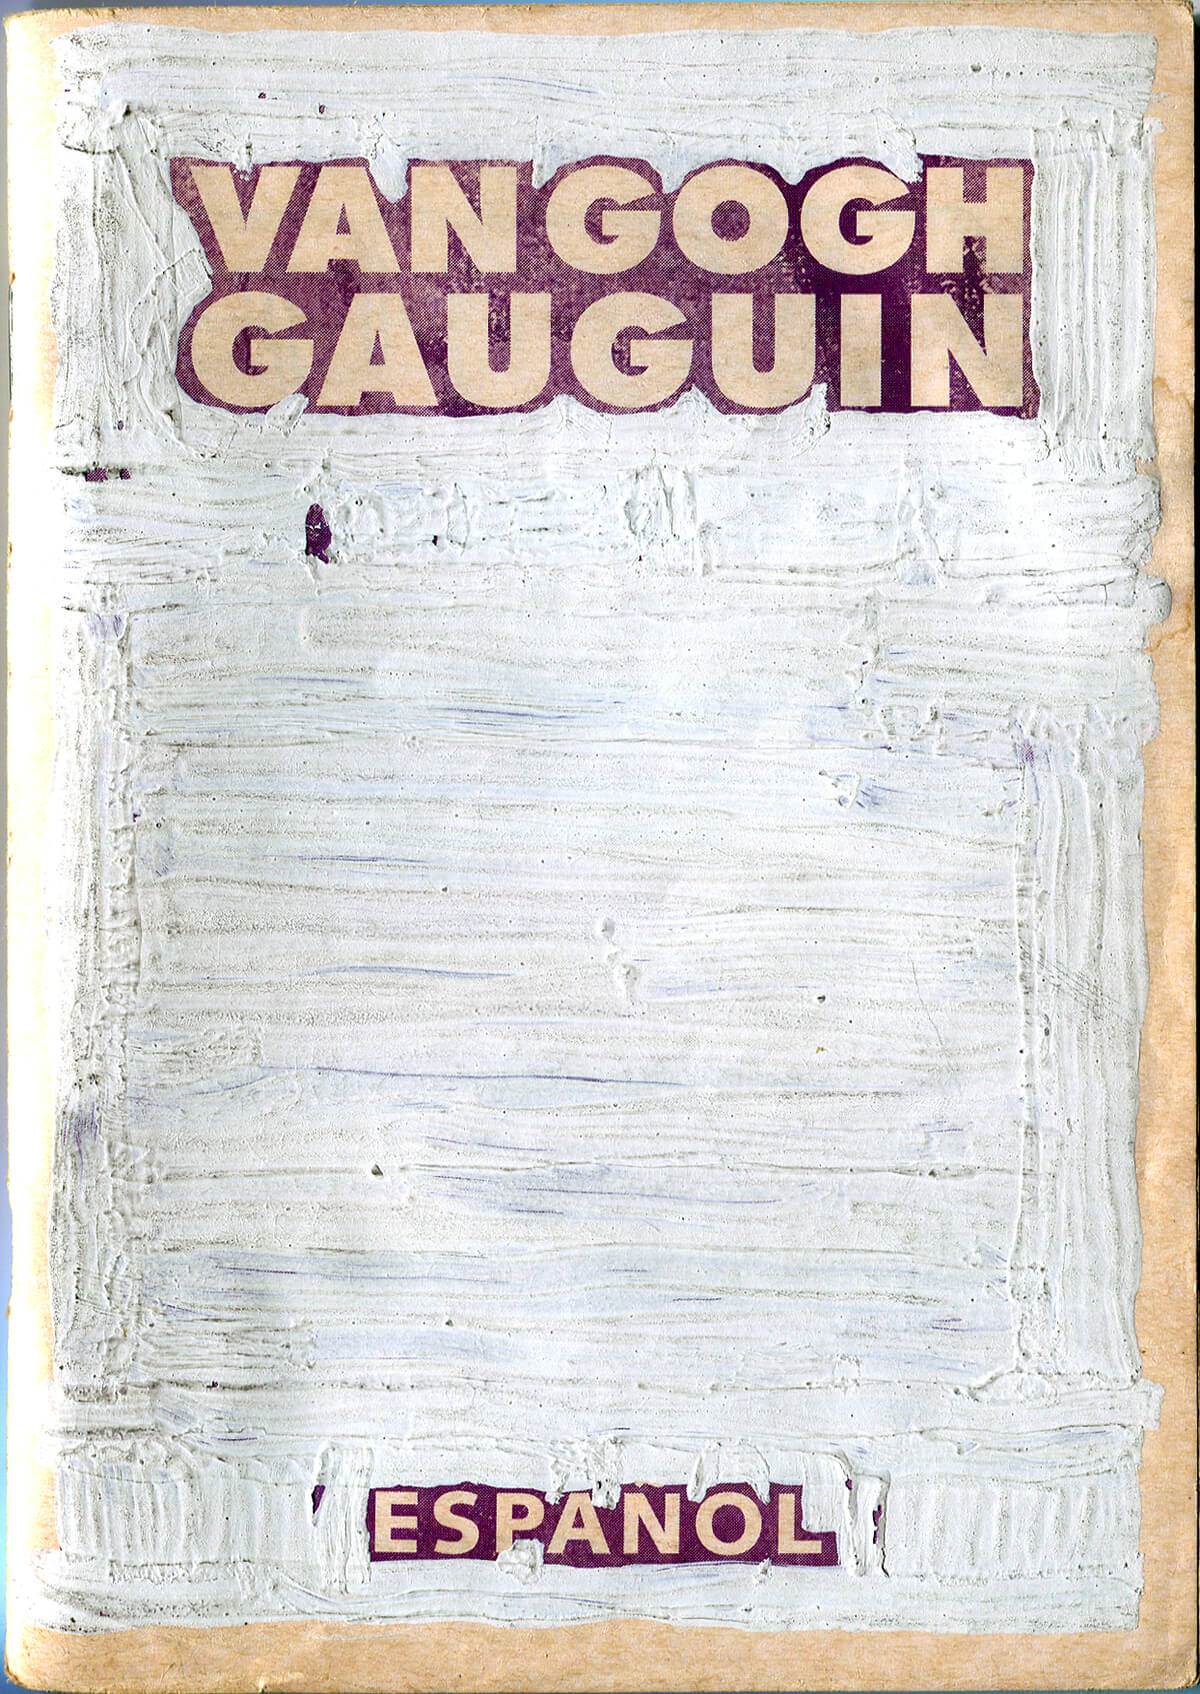 Van Gogh&Gauguin: Graffiti, versión Español, cover, 15 x 10.4 cm, 2002